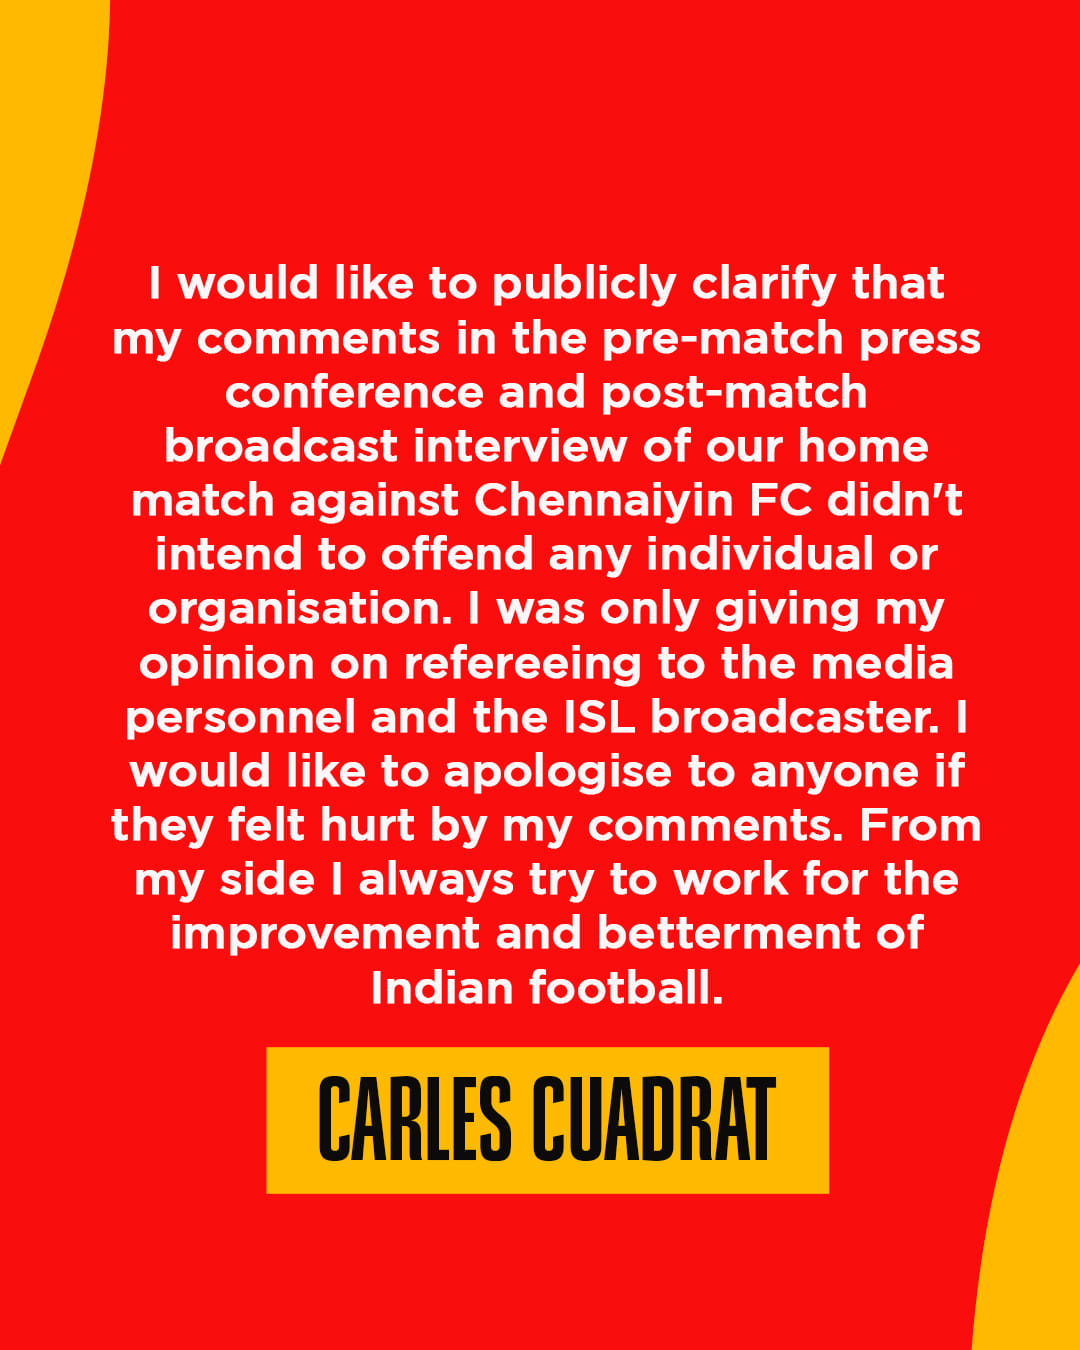 Carles Cuadrat Apologizes